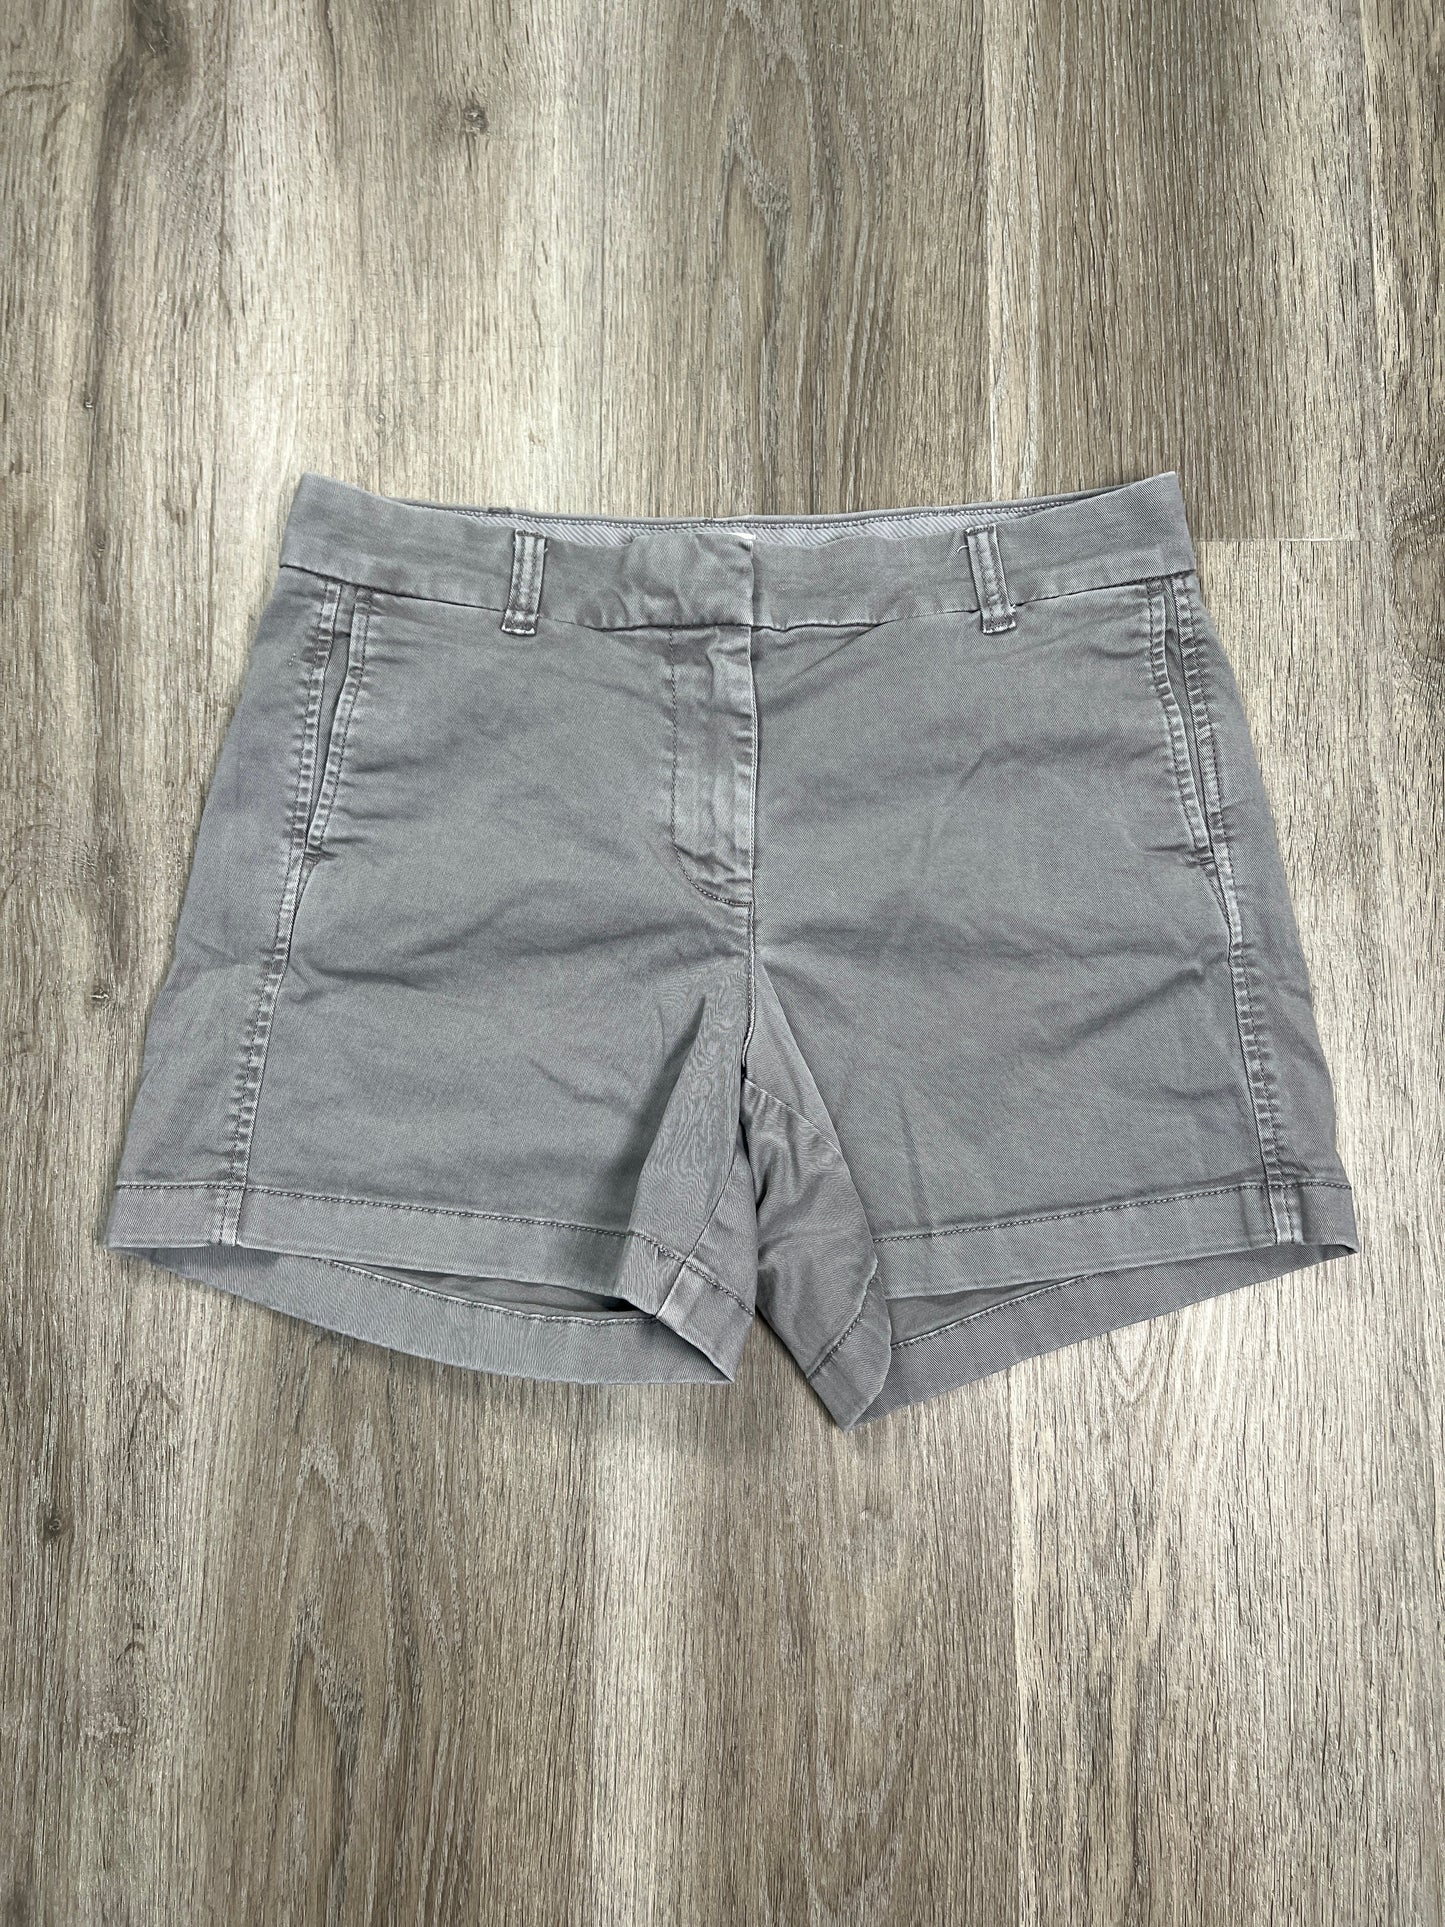 Grey Shorts J. Crew, Size M